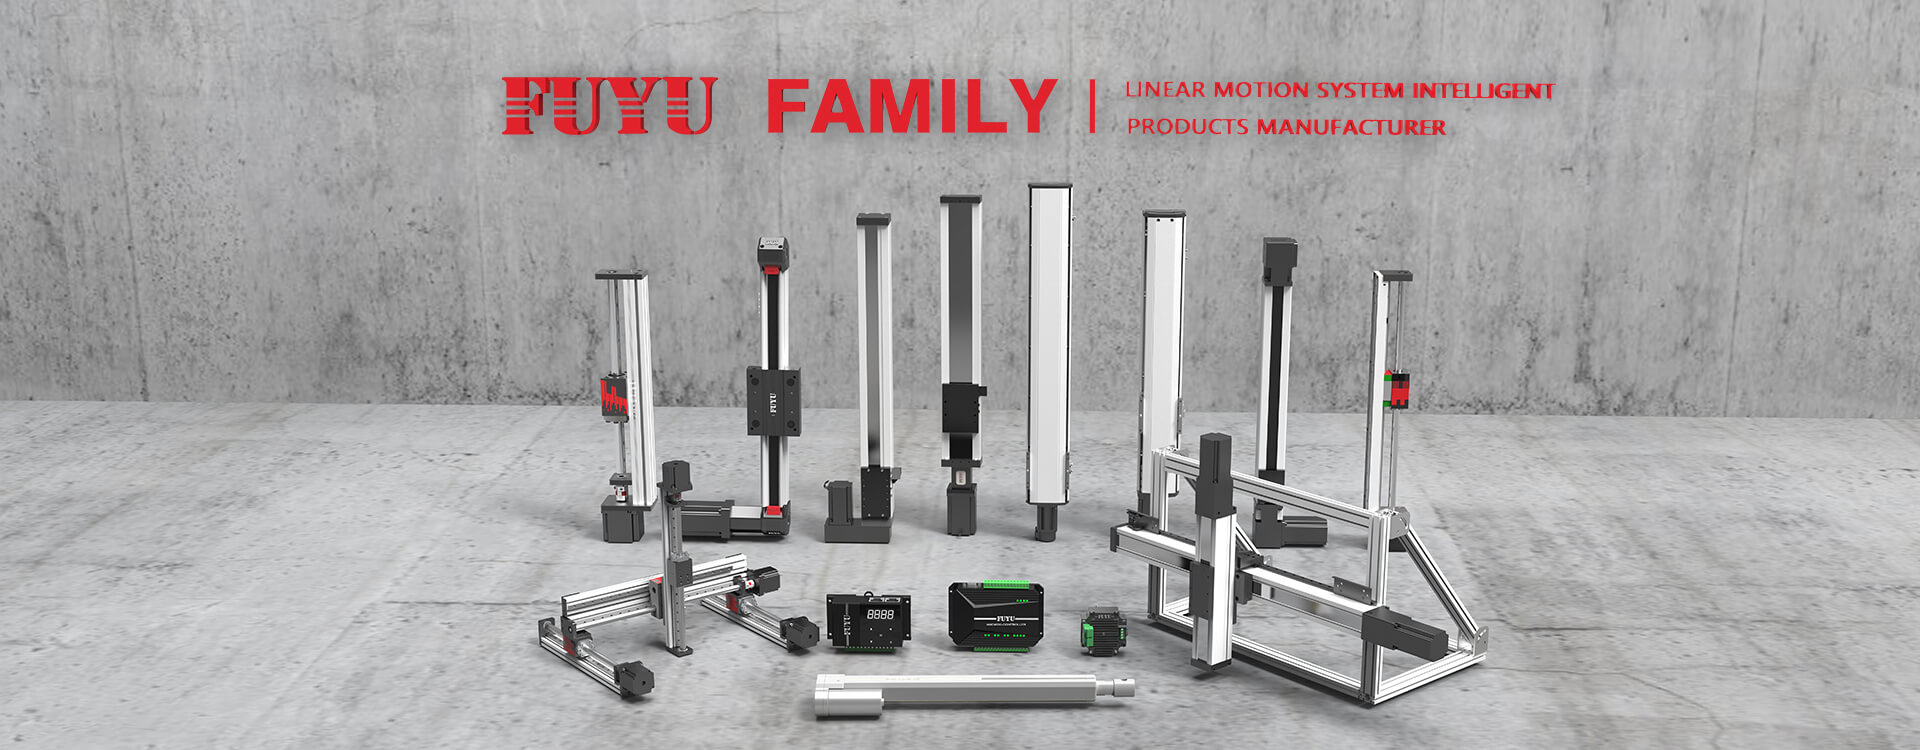 https://www.fuyumotion.com/uploads/Linear-Motion-System-Brand-Manufacturer.jpg